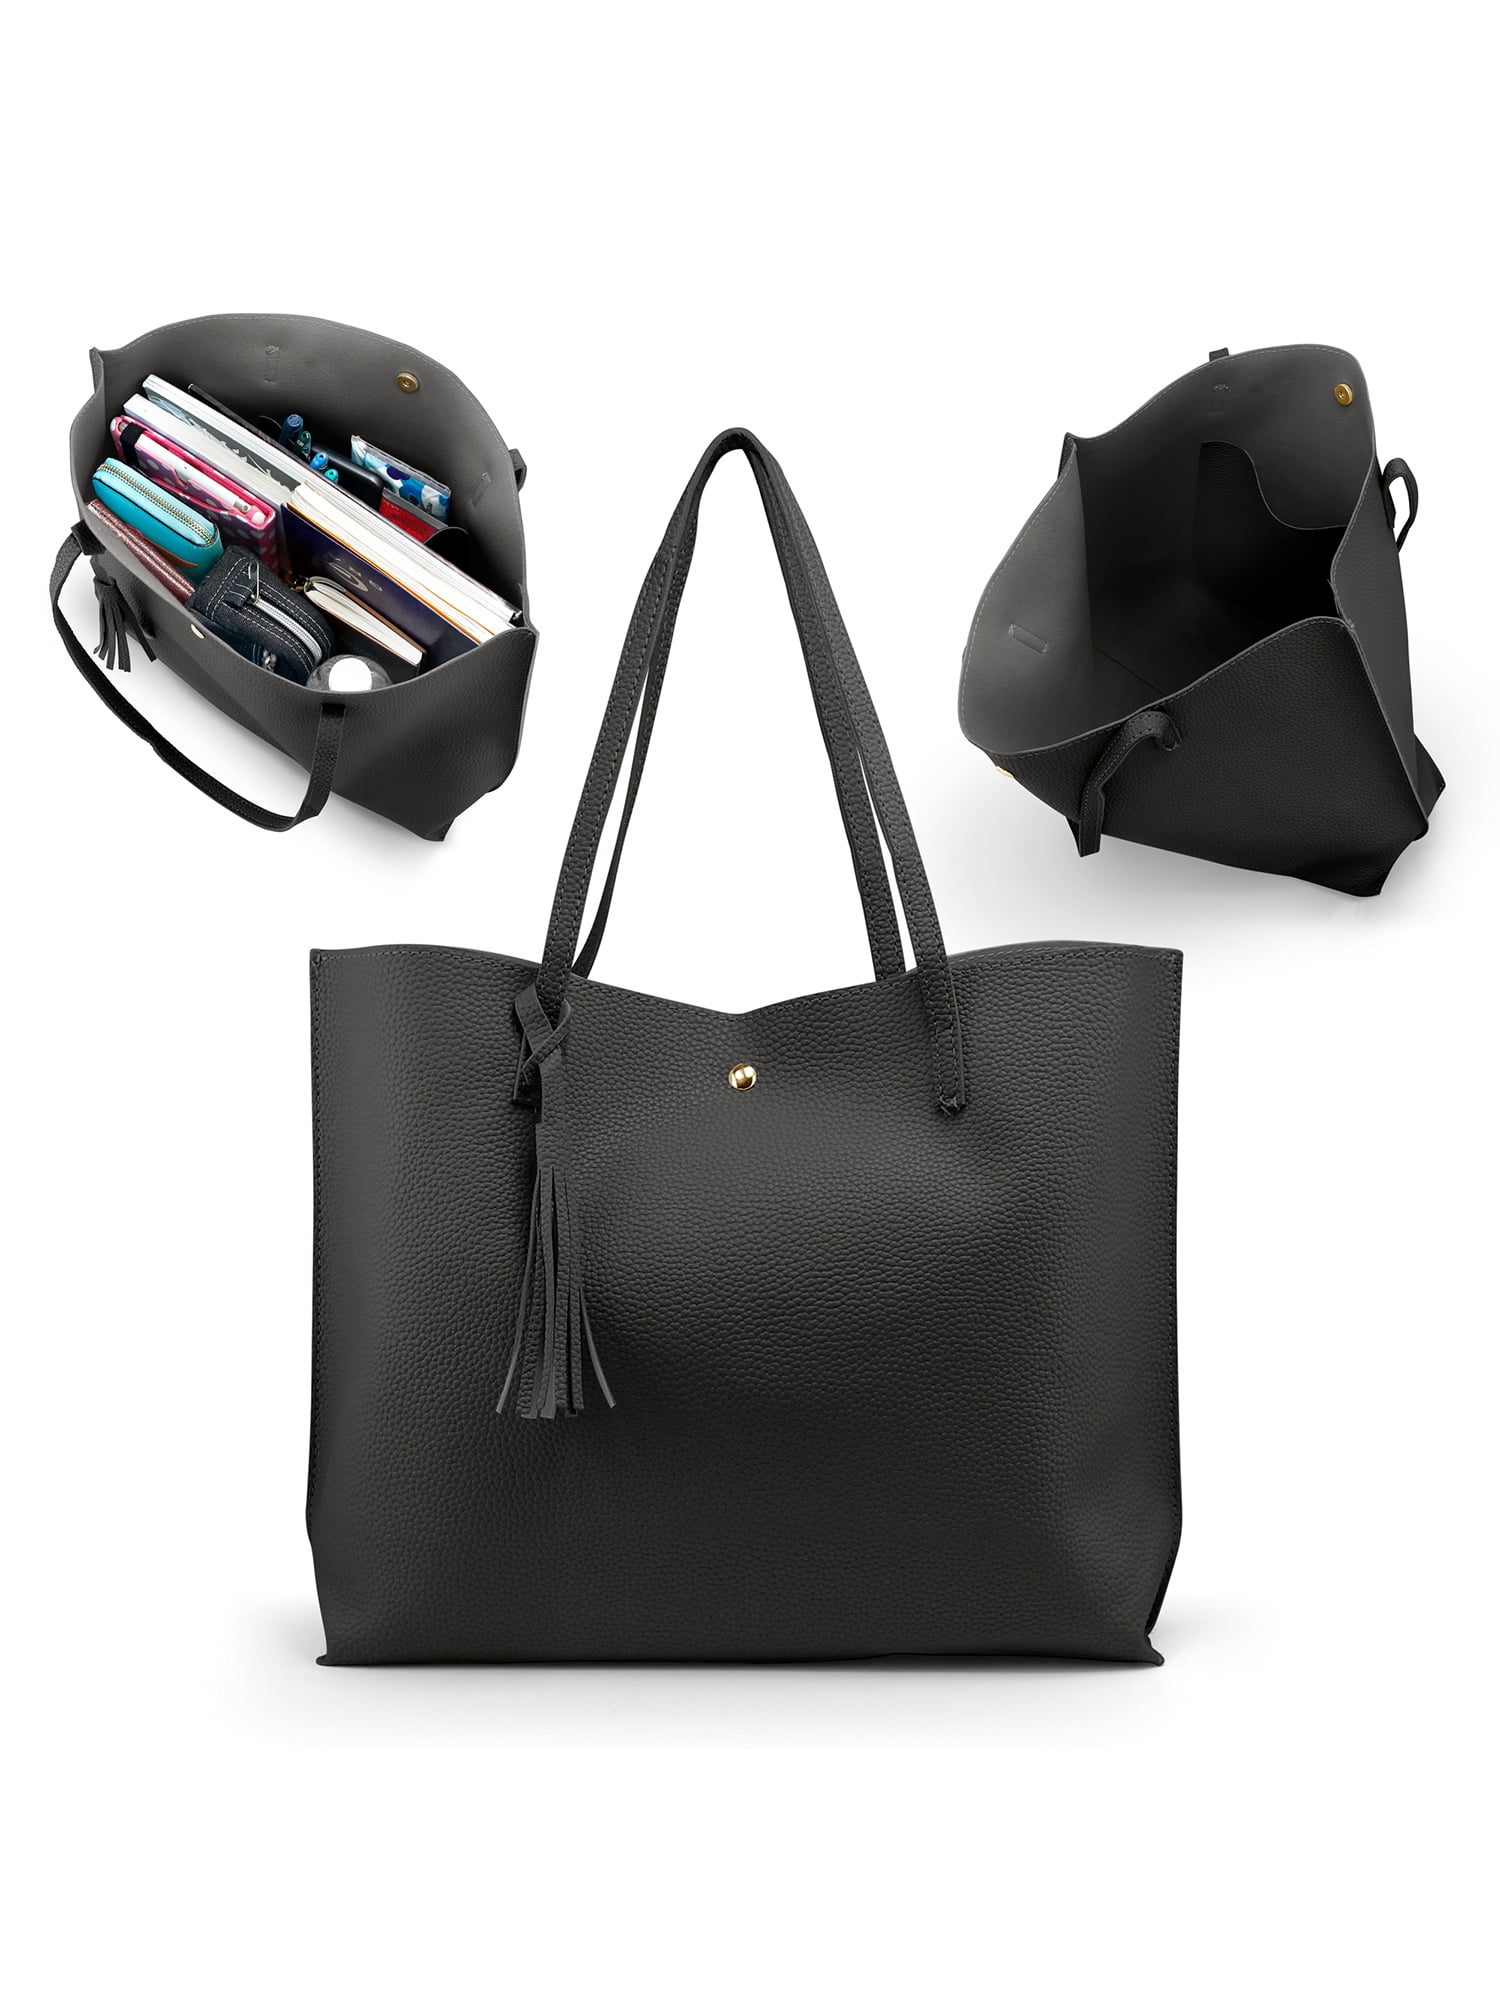 Fashion Women Faux Leather Handbags Tote Shoulder Bag Messenger Crossbody Purse 